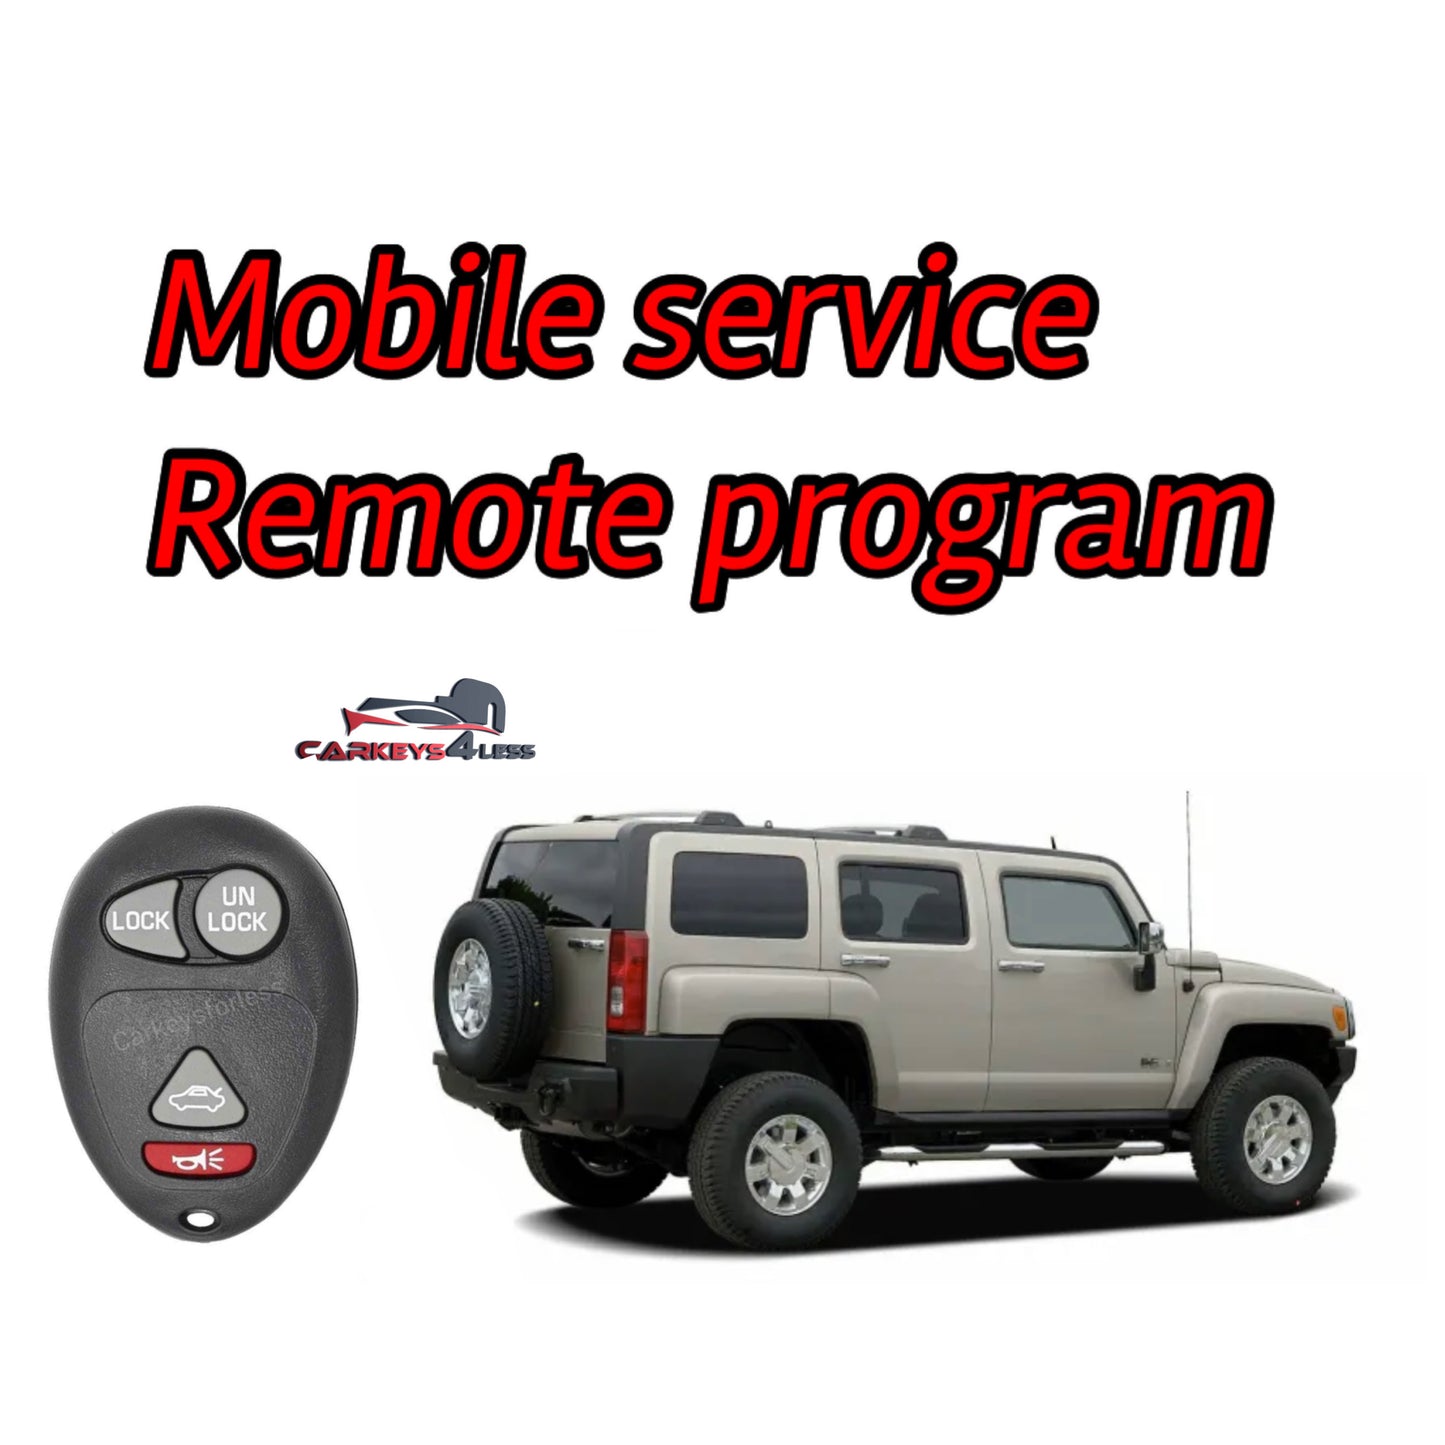 Mobile service for an aftermarket gm remote program